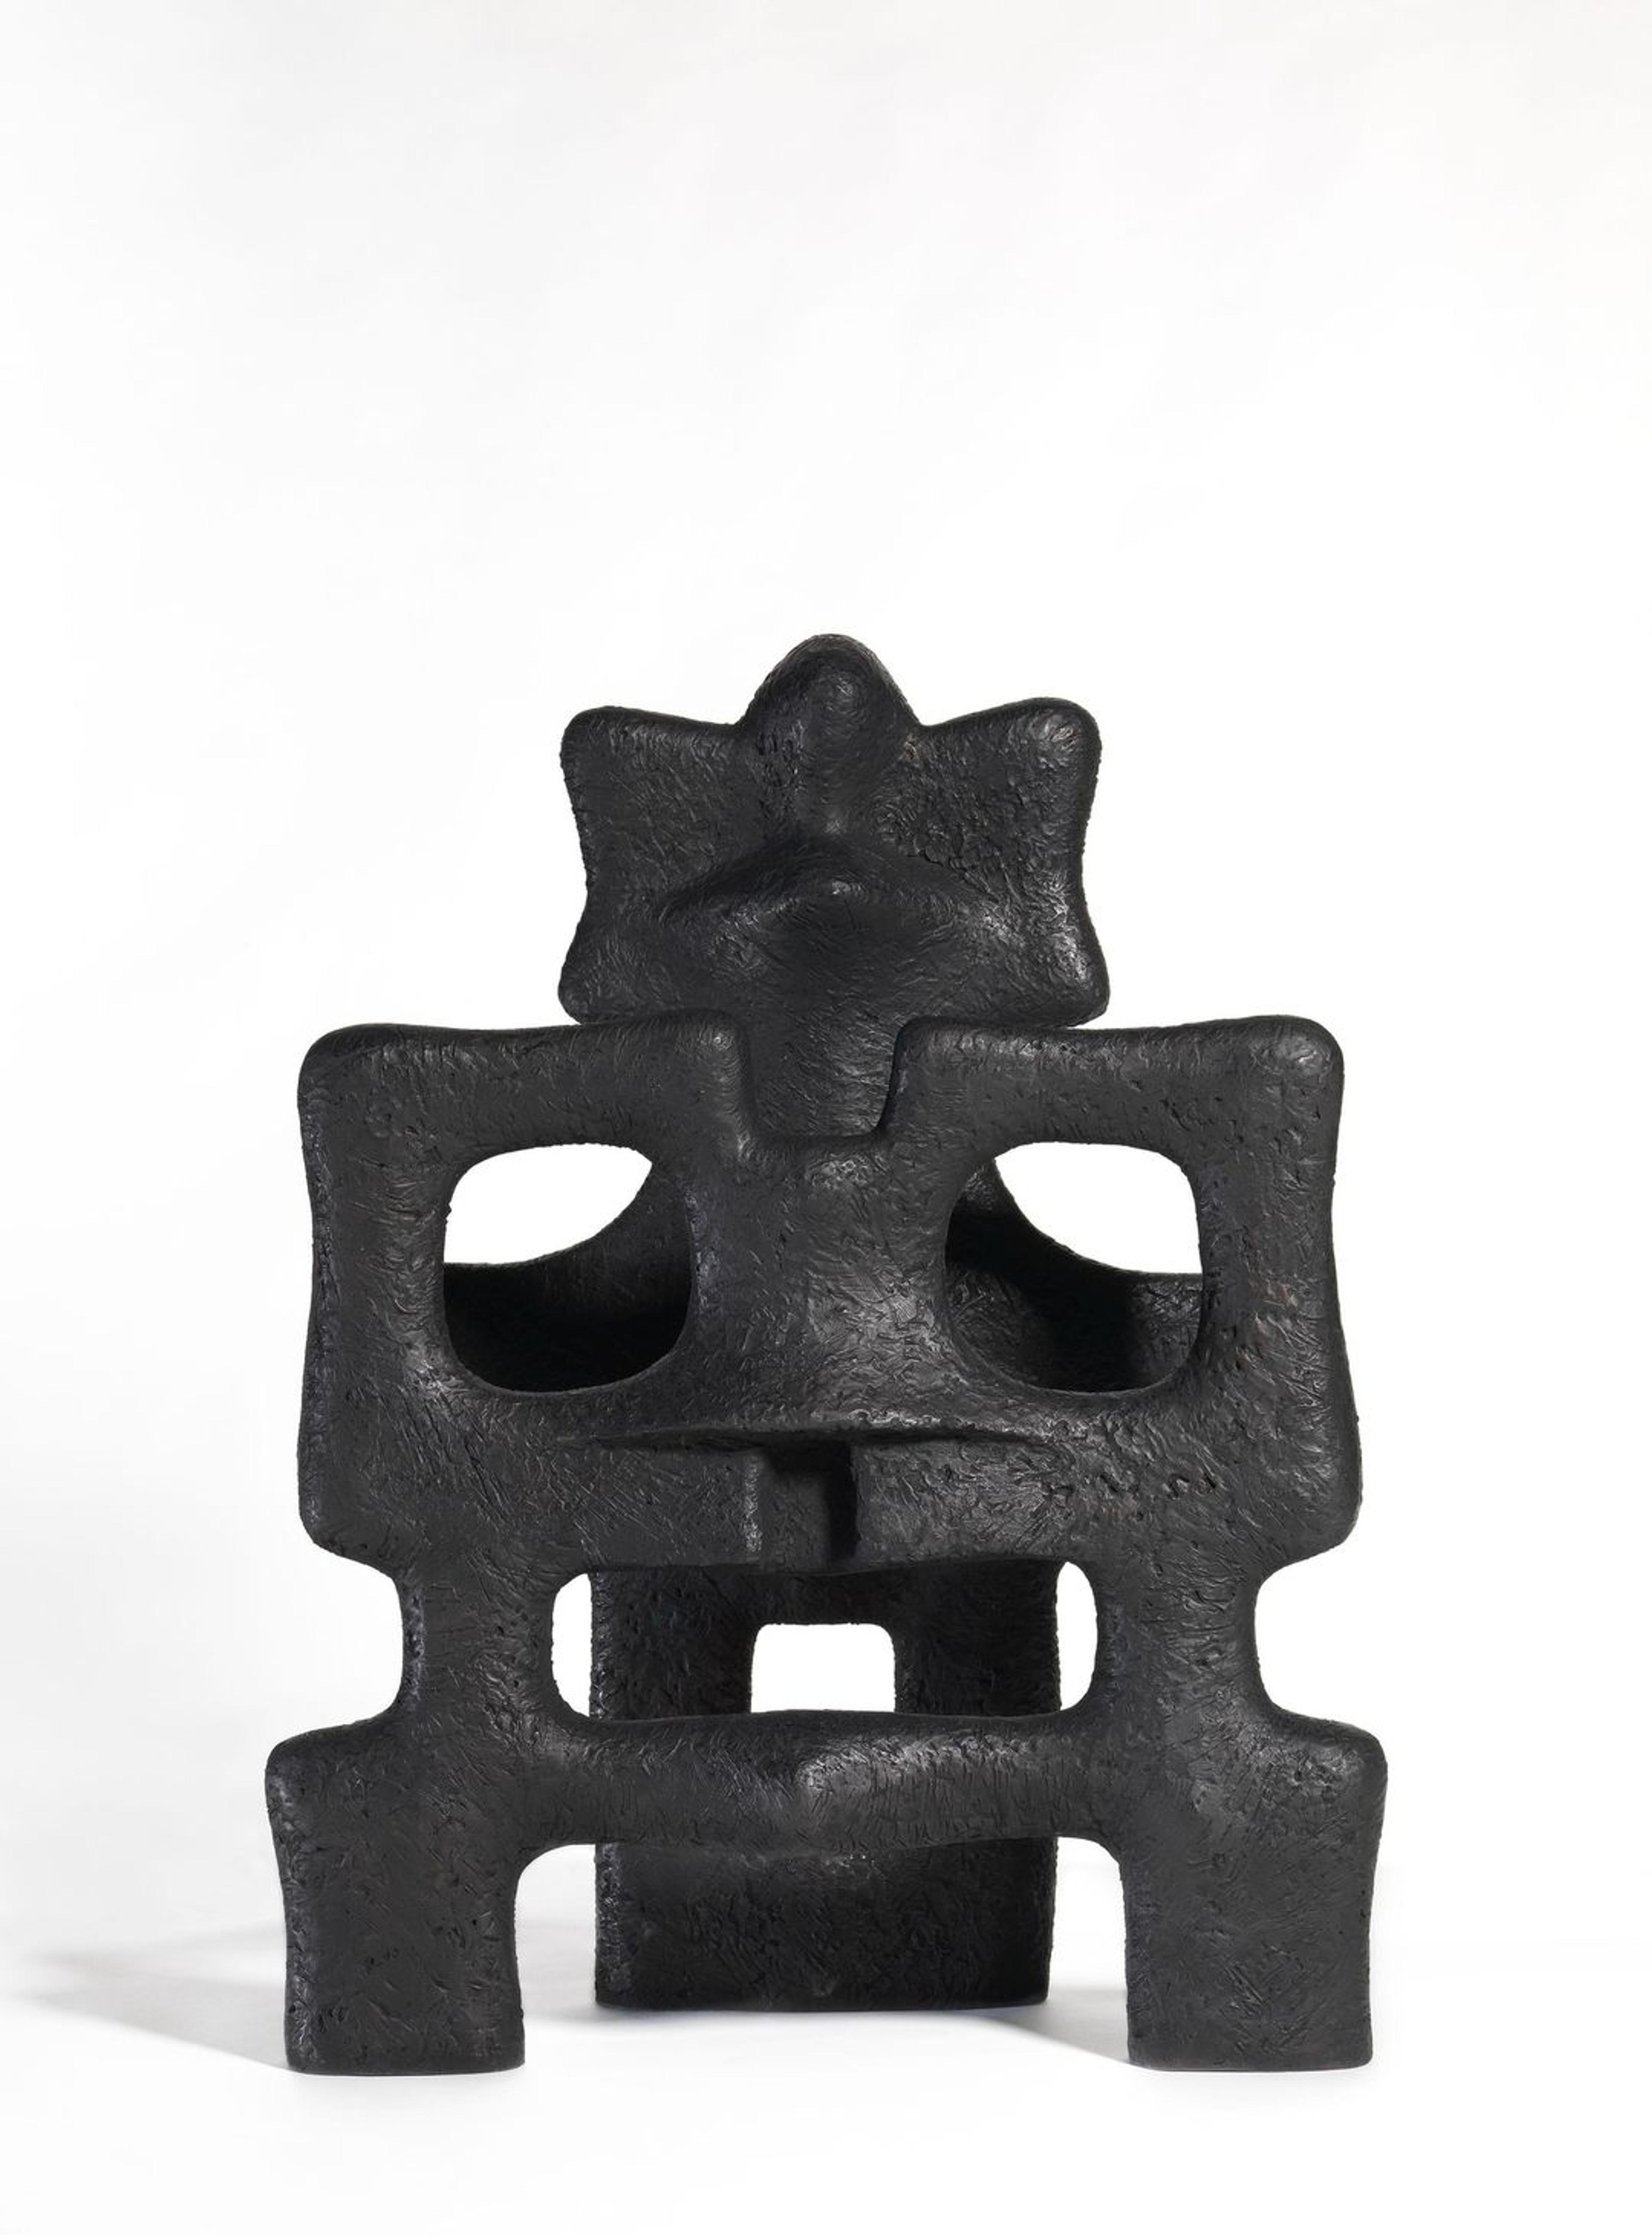 En sort abstrakt skulptur med avrundede former.